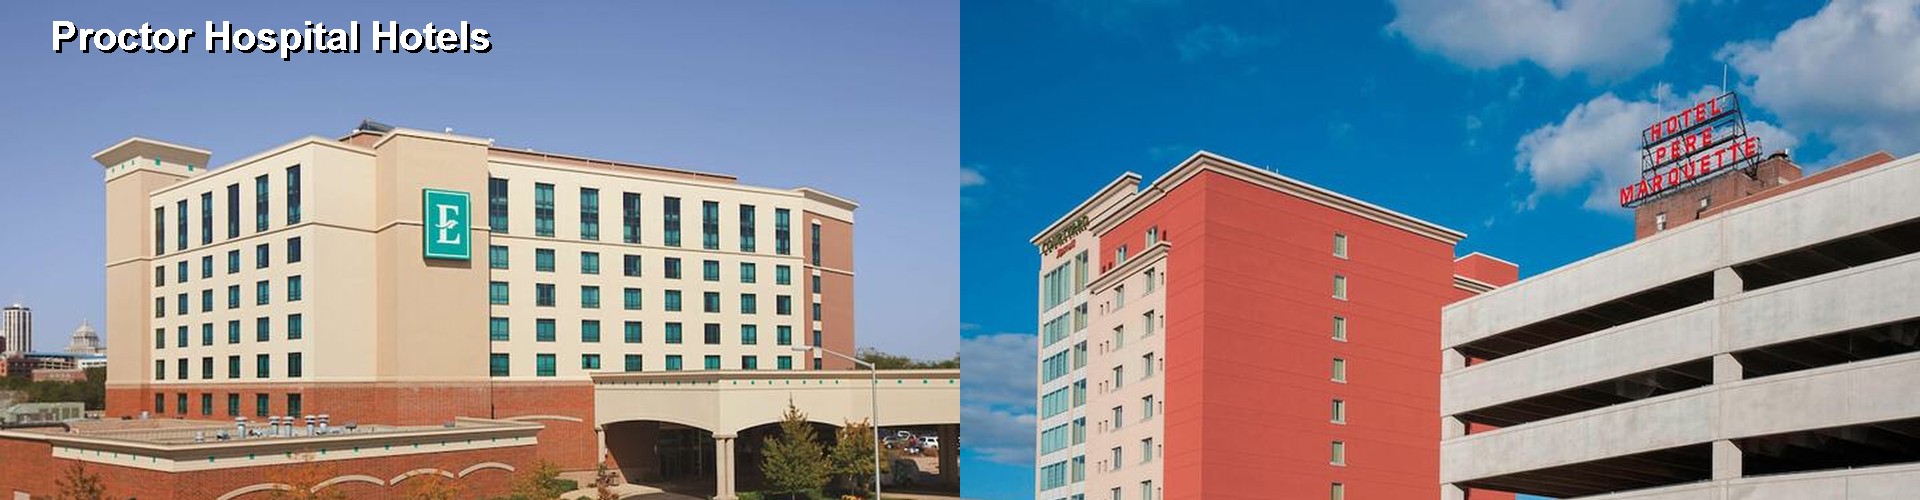 4 Best Hotels near Proctor Hospital